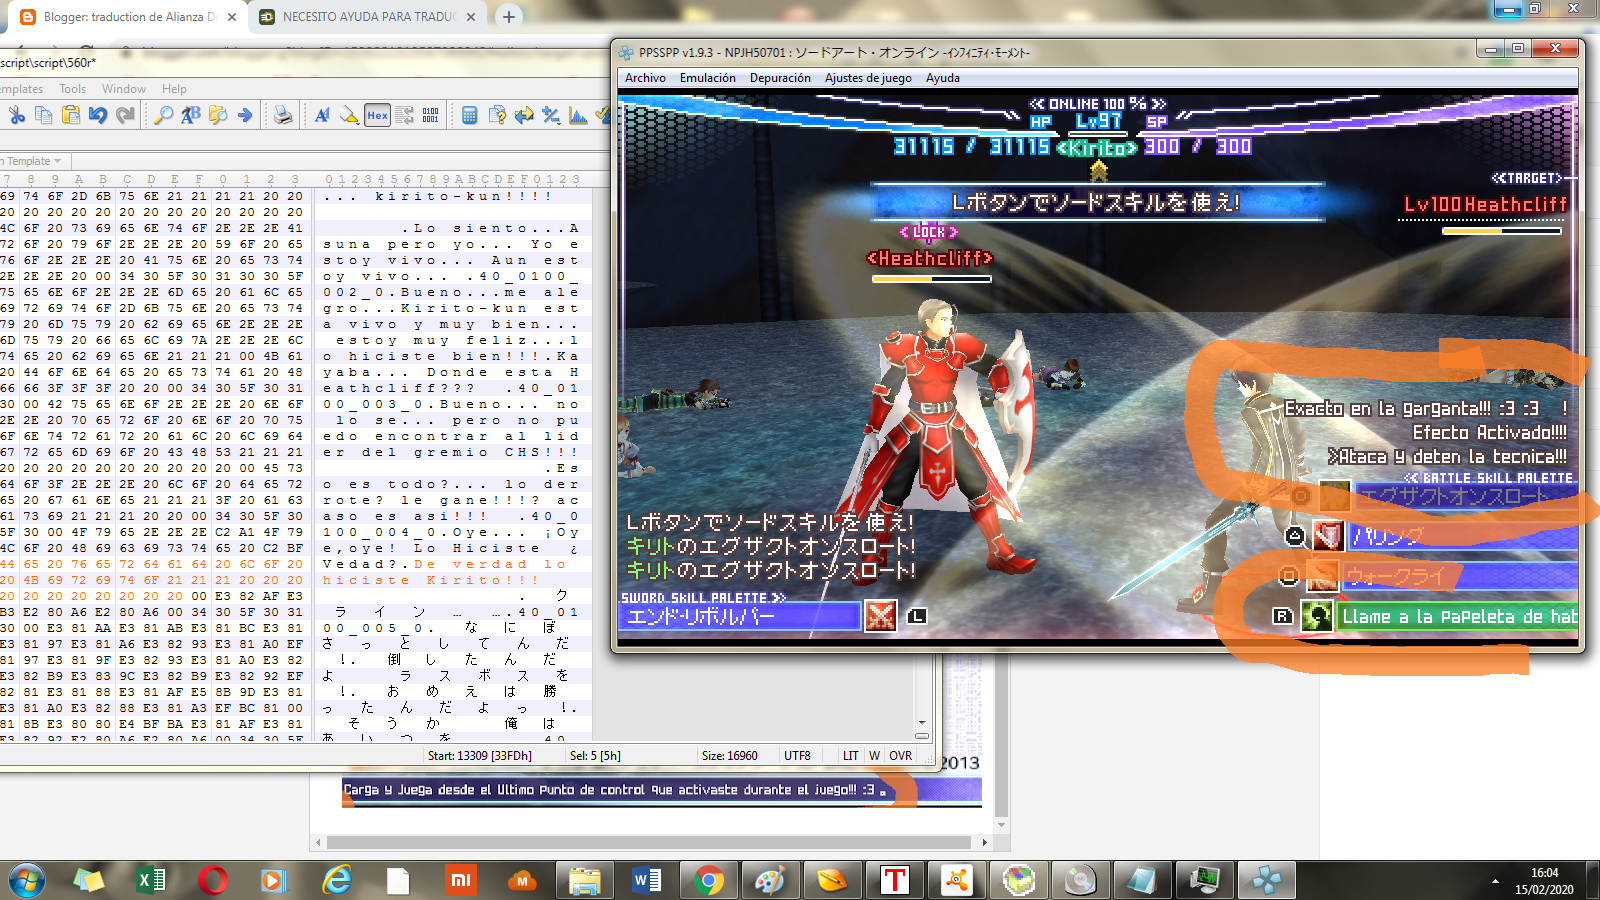 Sword Art Online - Infinity Moment ROM - PSP Download - Emulator Games